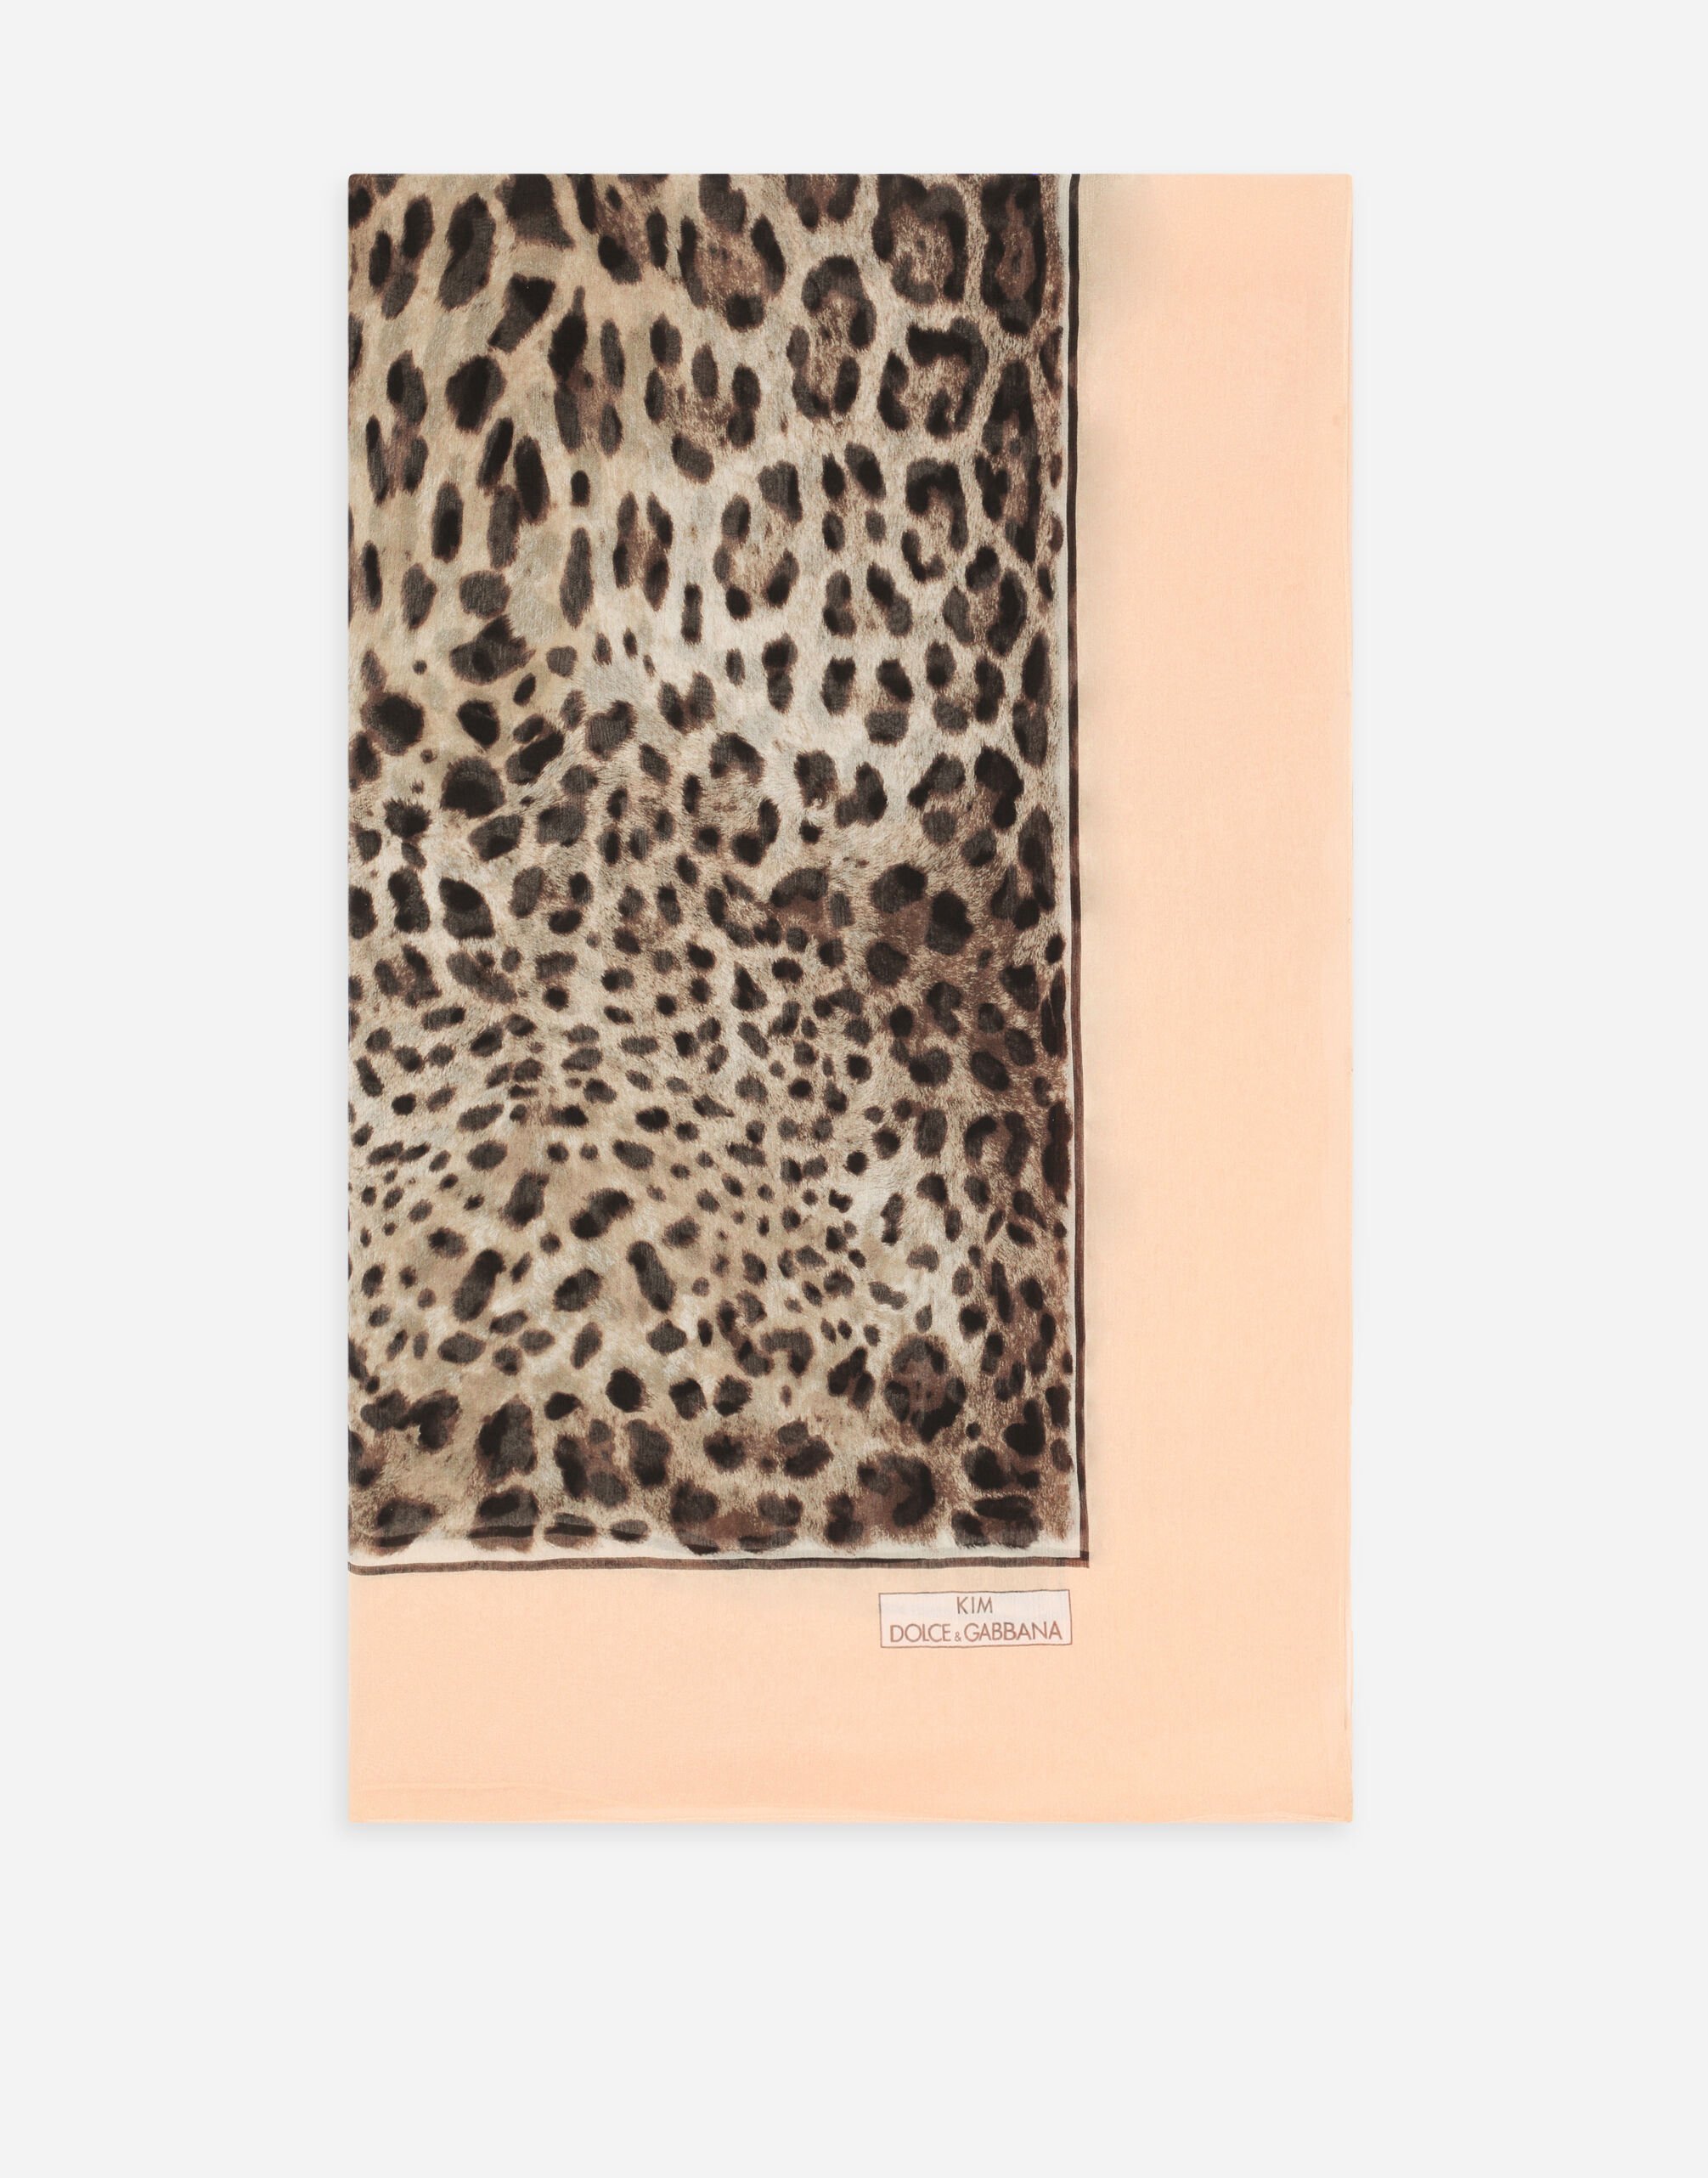 Dolce&Gabbana KIM DOLCE&GABBANA Silk crepon scarf with leopard print Animal Print BE1348AM568